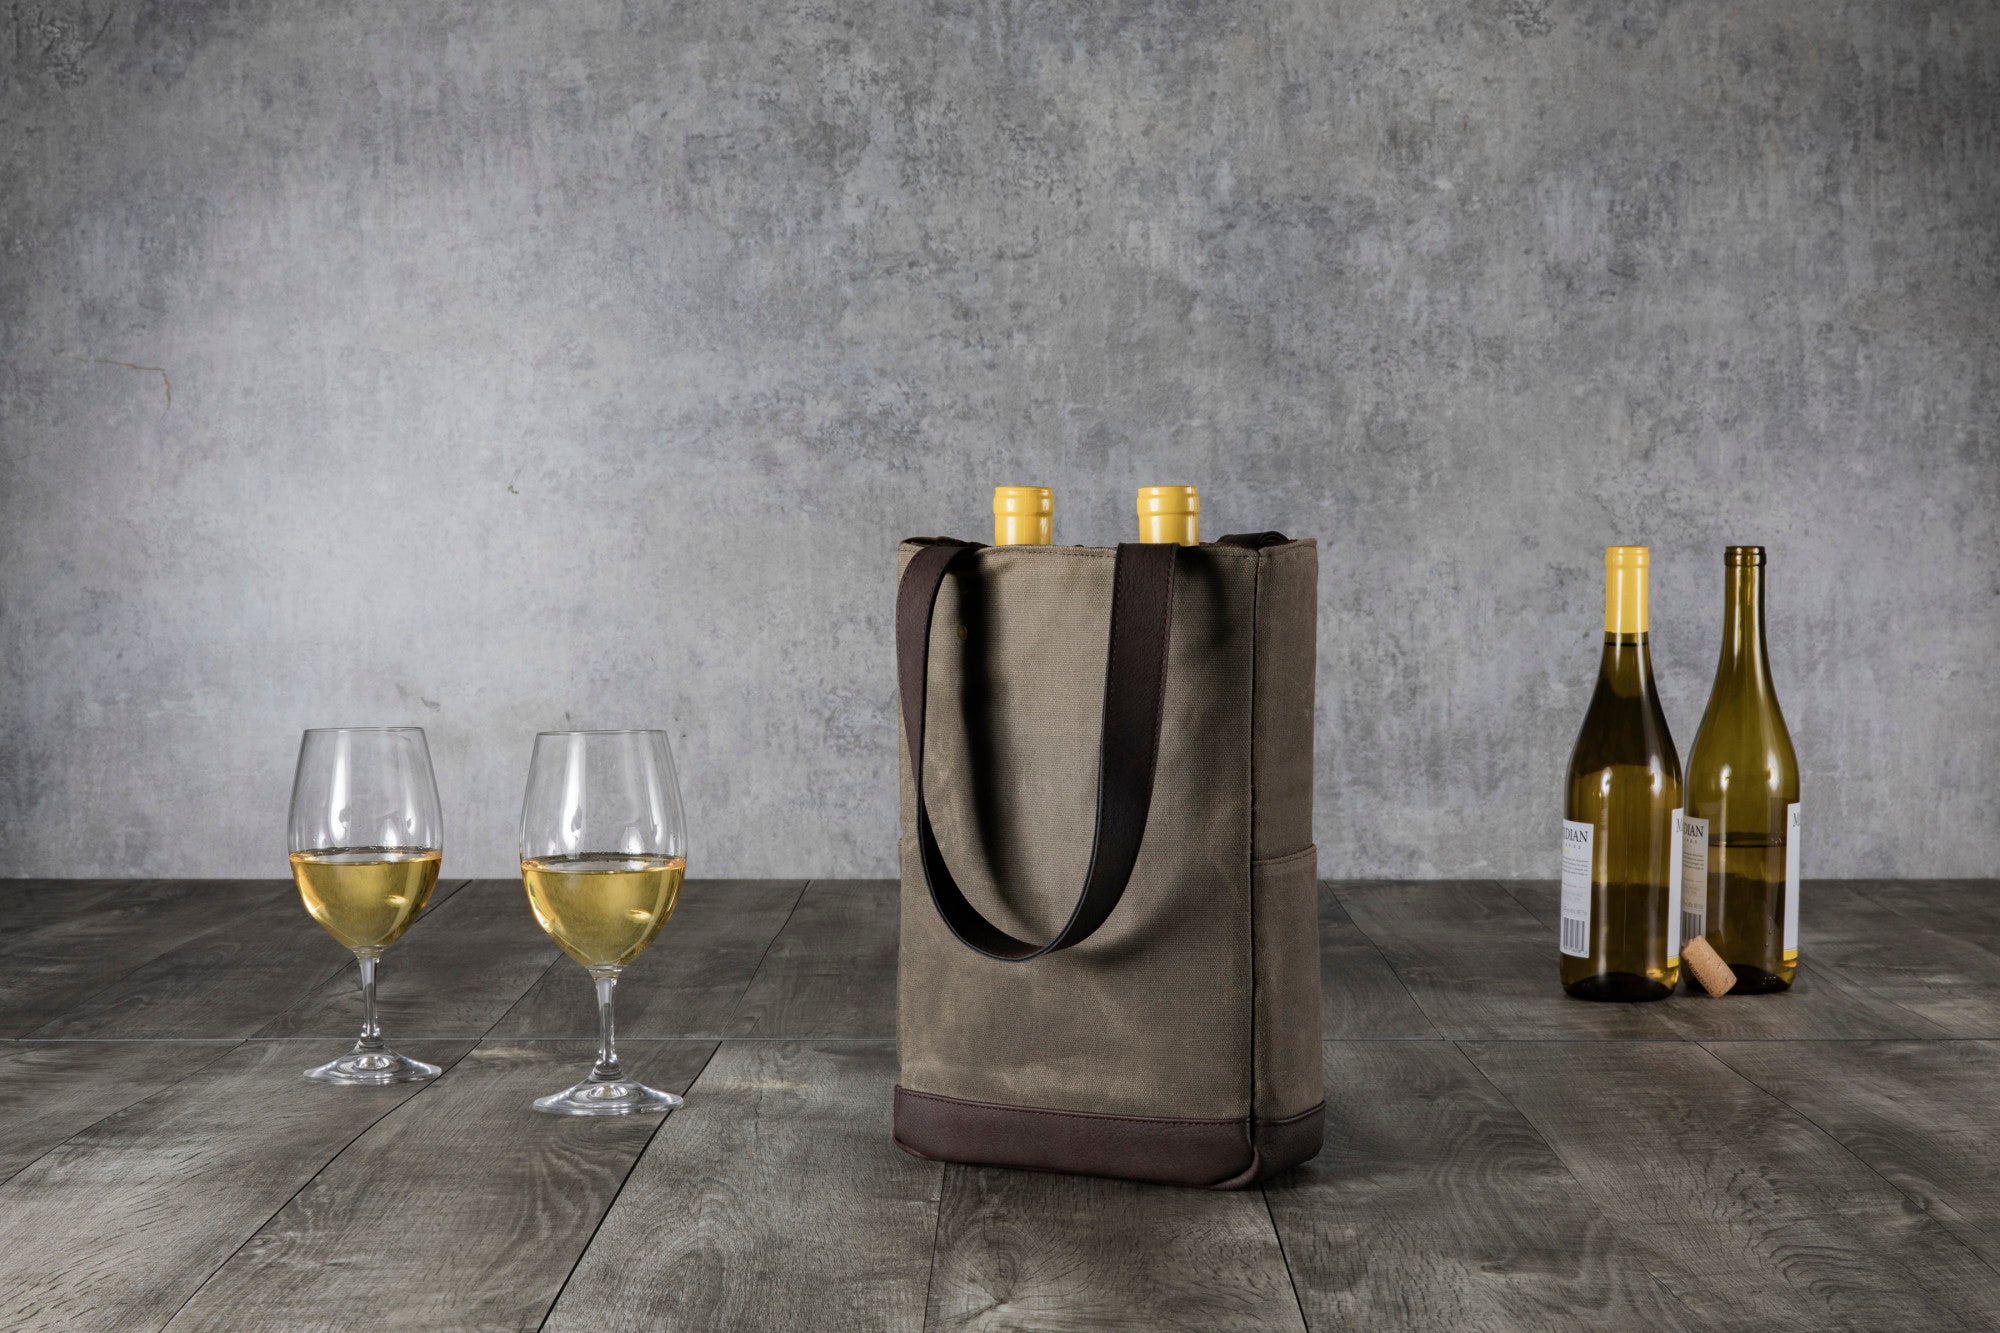 Raiders 2-Bottle Wine Cooler Bag - Khaki Green & Beige – PICNIC